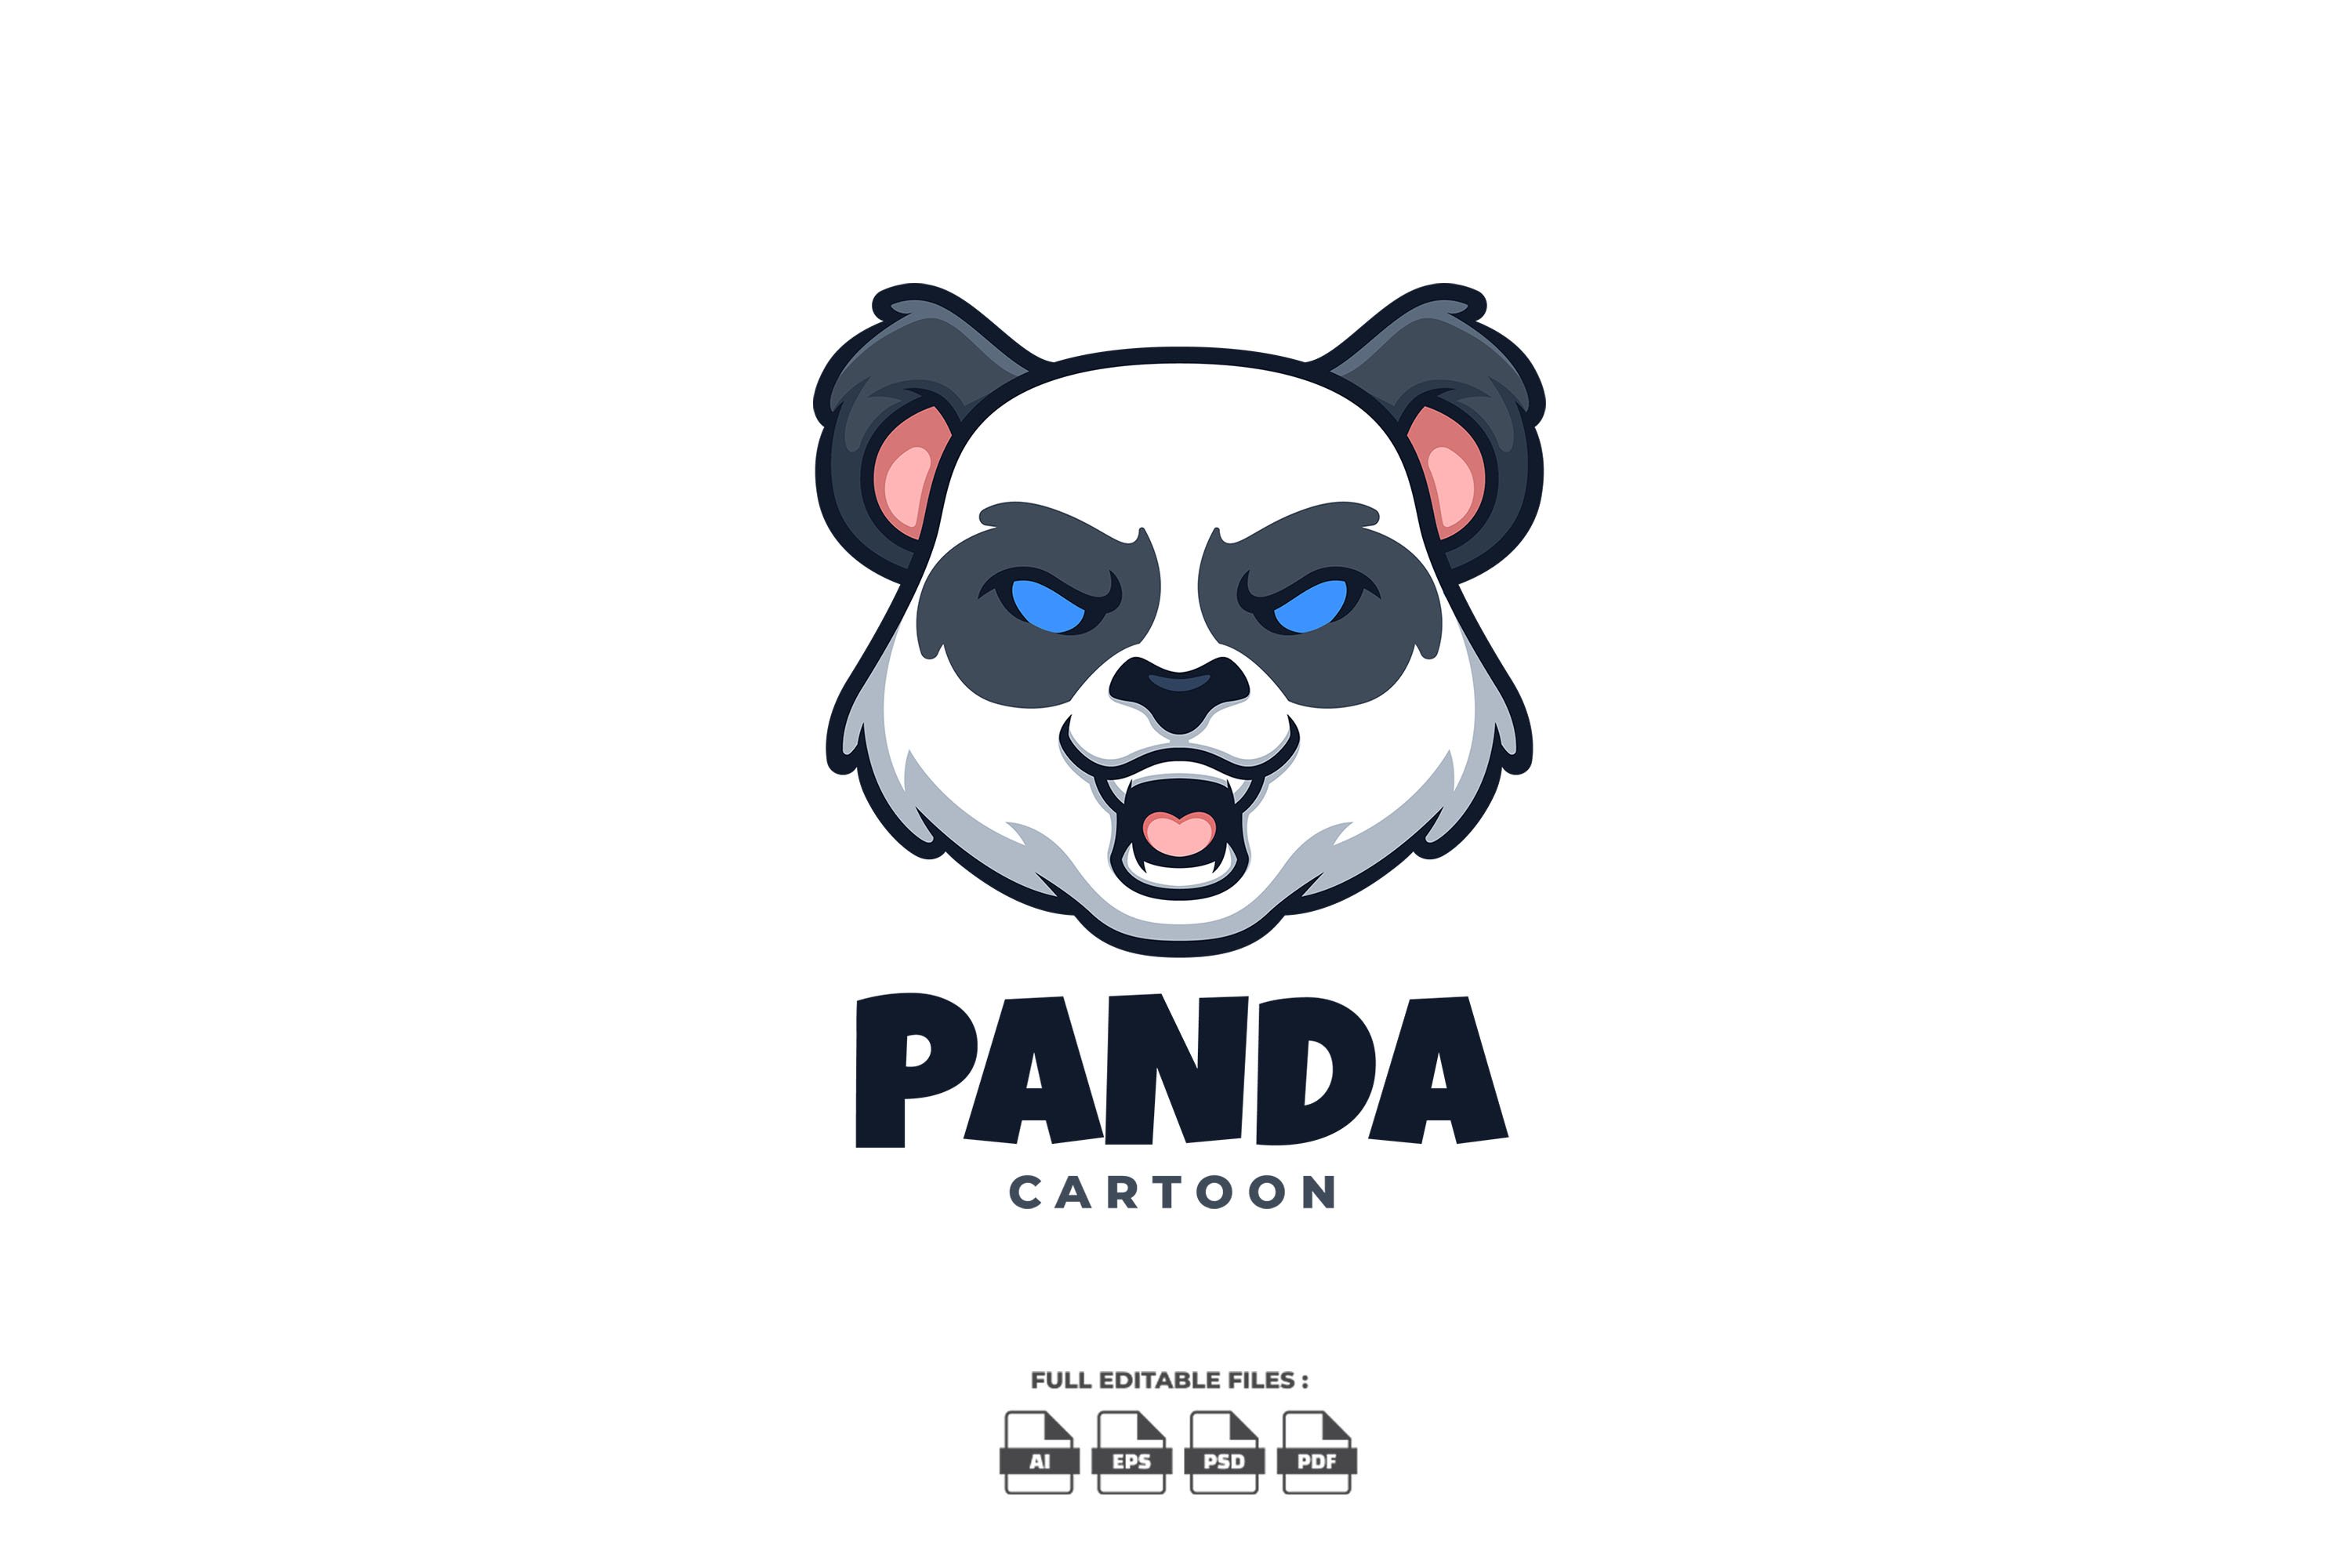 Panda Cartoon Logo cover image.